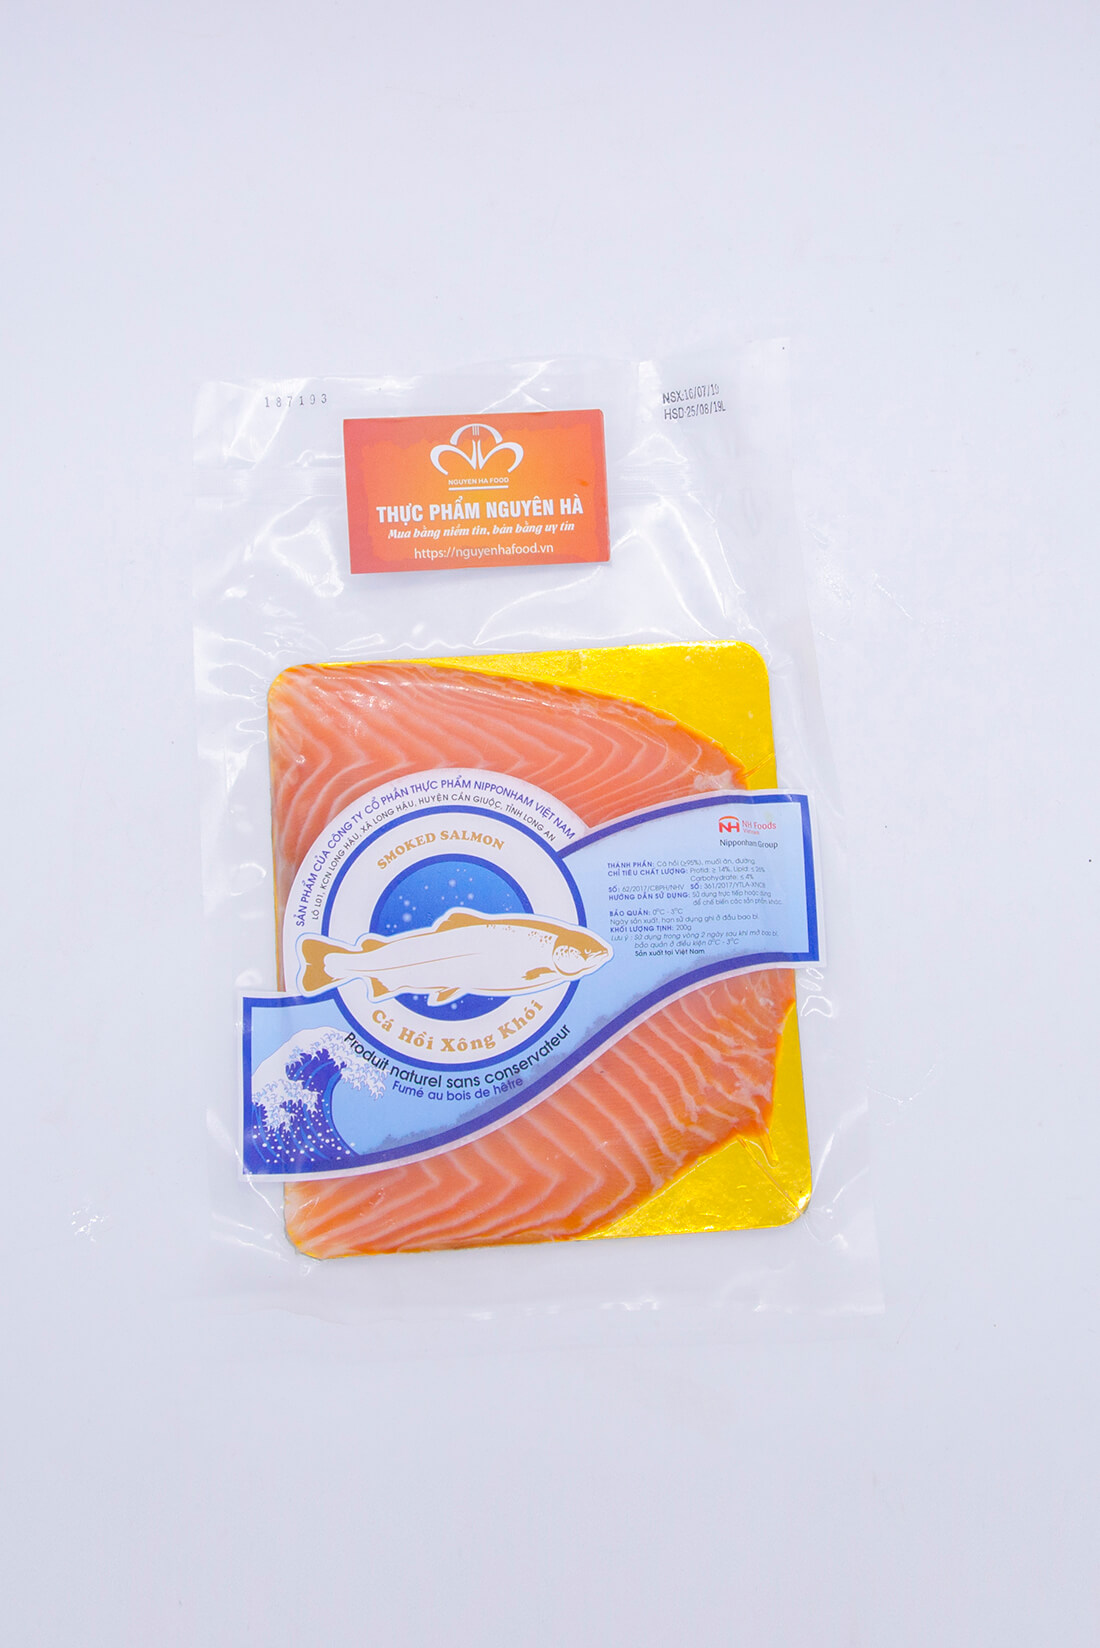 thit-ca-hoi-xong-khoi-cat-lat-smoked-salmon-sliced-1